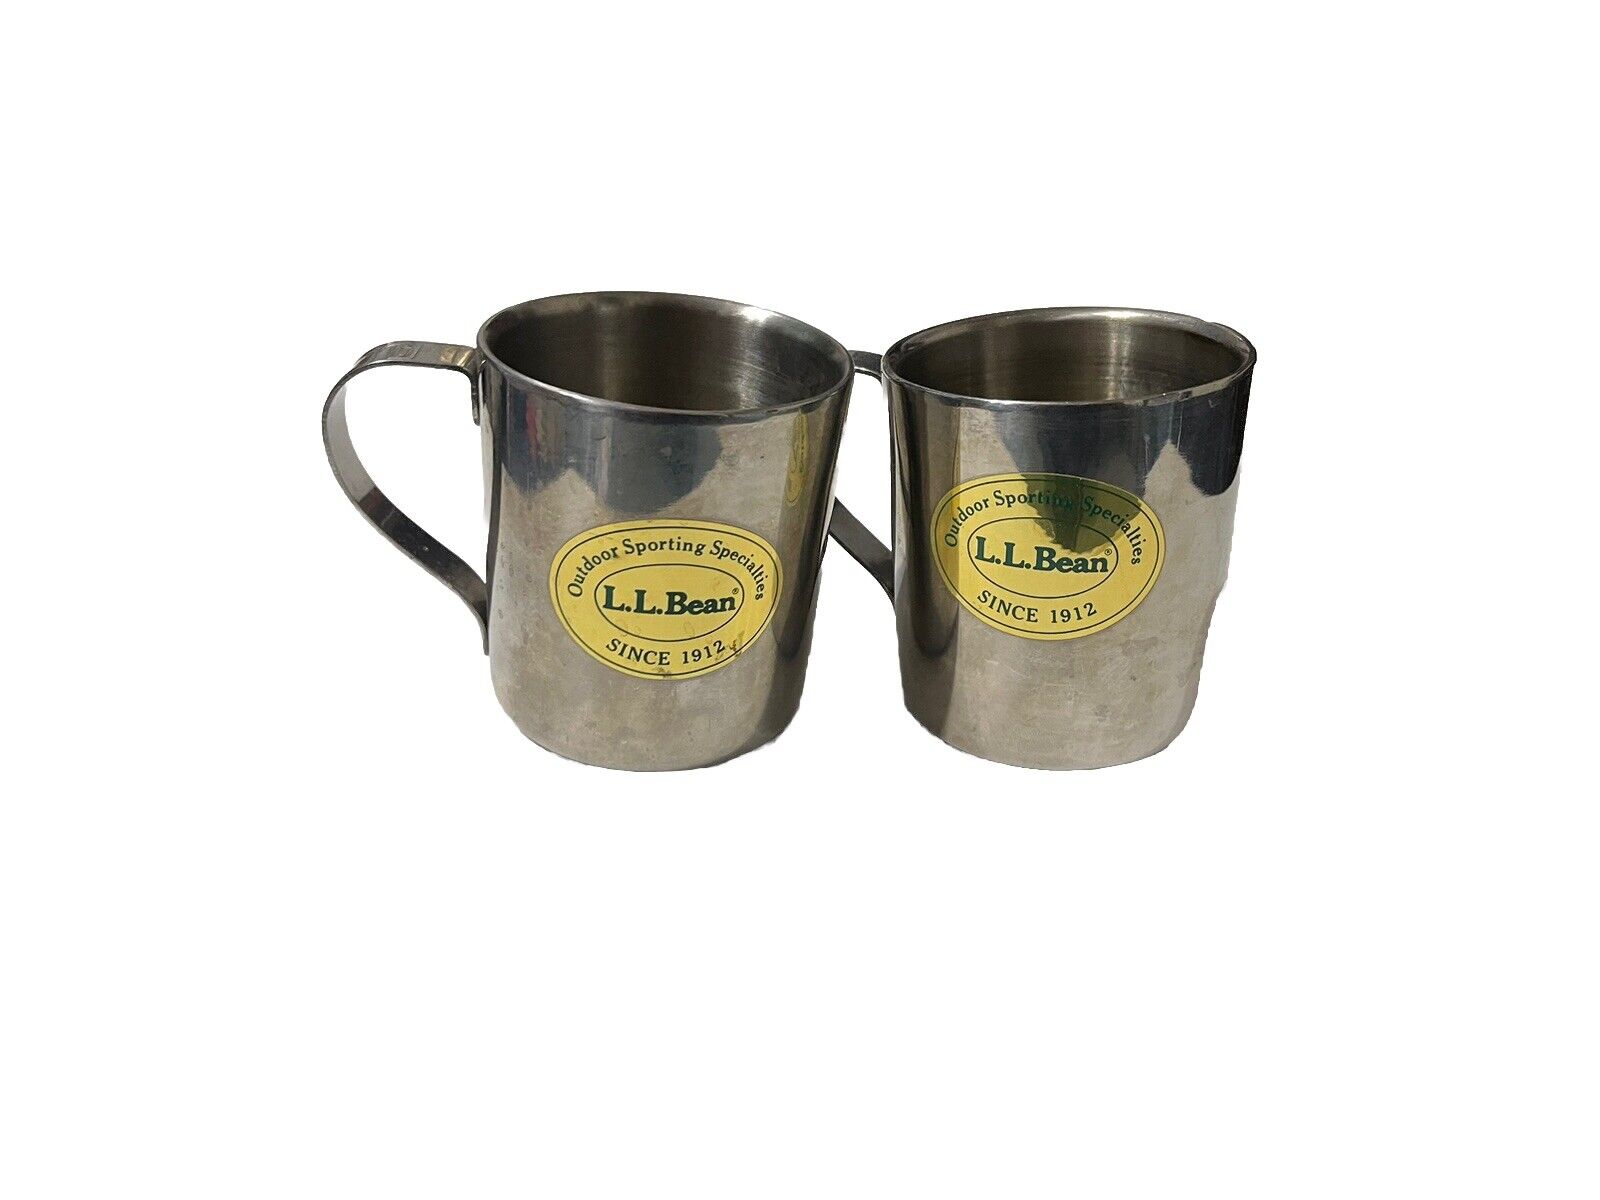 Pair Of LL Bean Stainless Steel Mugs